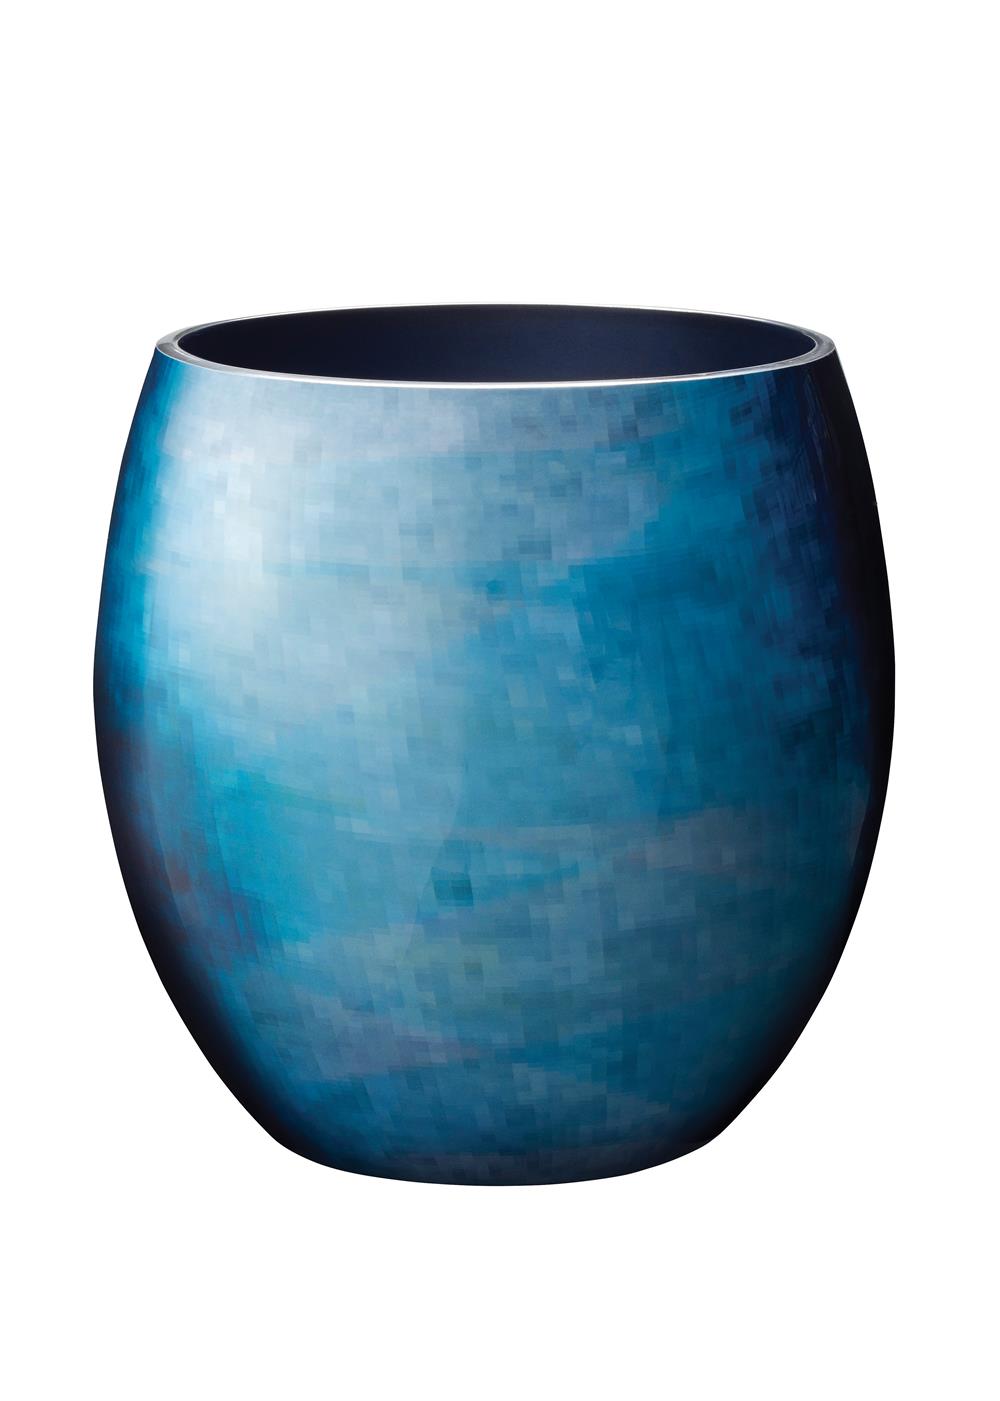 Stelton Stelton – Stockholm Horizon vase Ø 13,1 cm